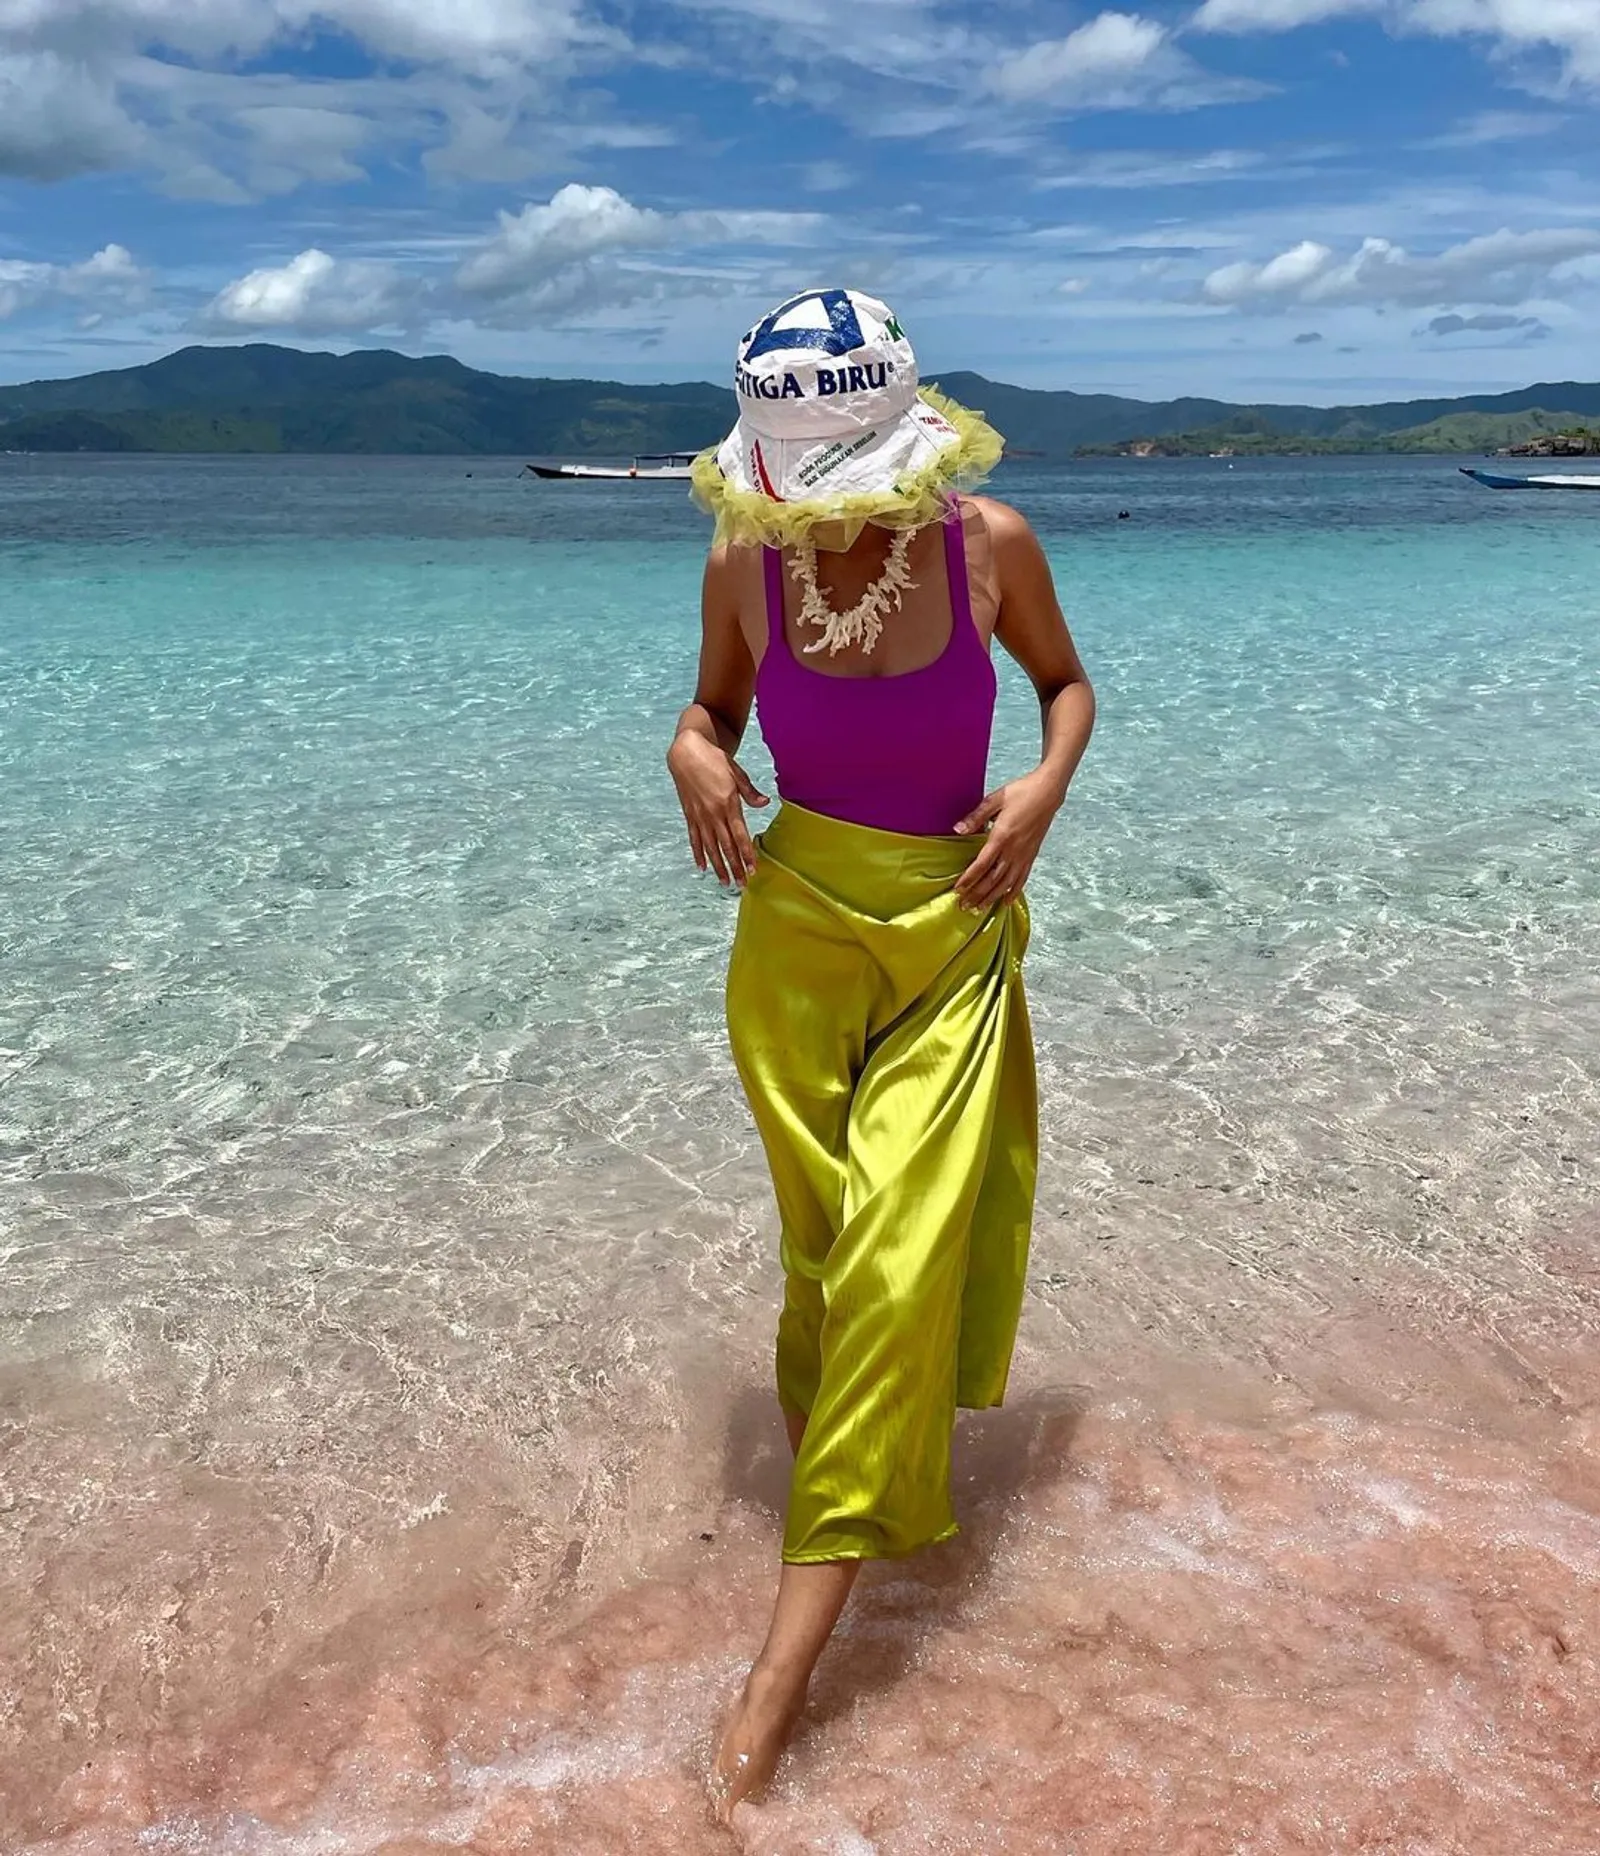 Ide Upcycling a La Putri Samboda, Sulap Barang Bekas Jadi Fashion Item